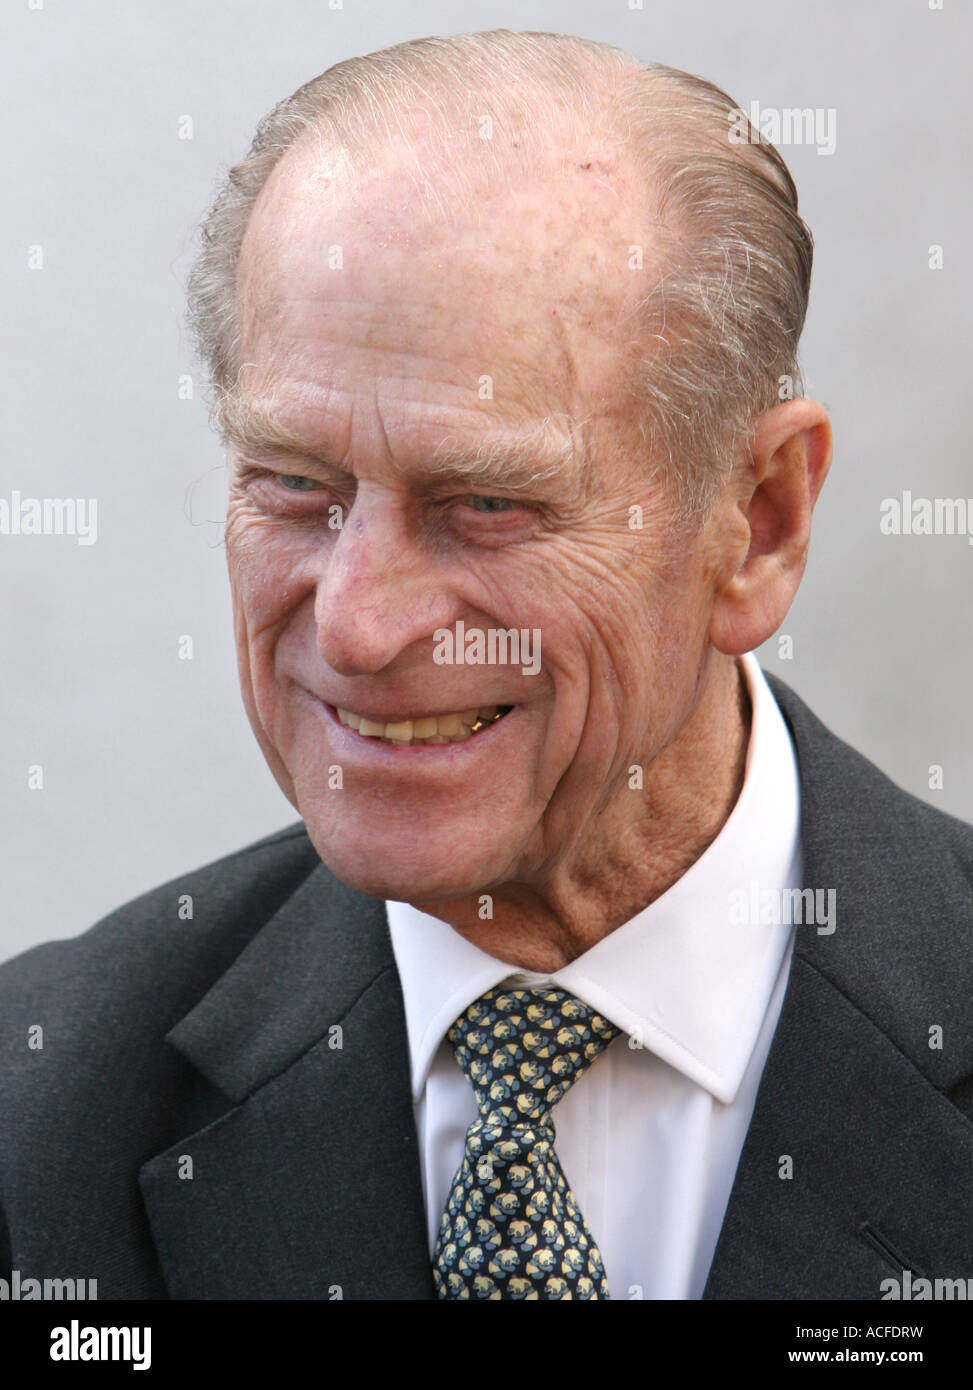 HRH Prince Philip, Duke of Edinburgh smiling Stock Photo